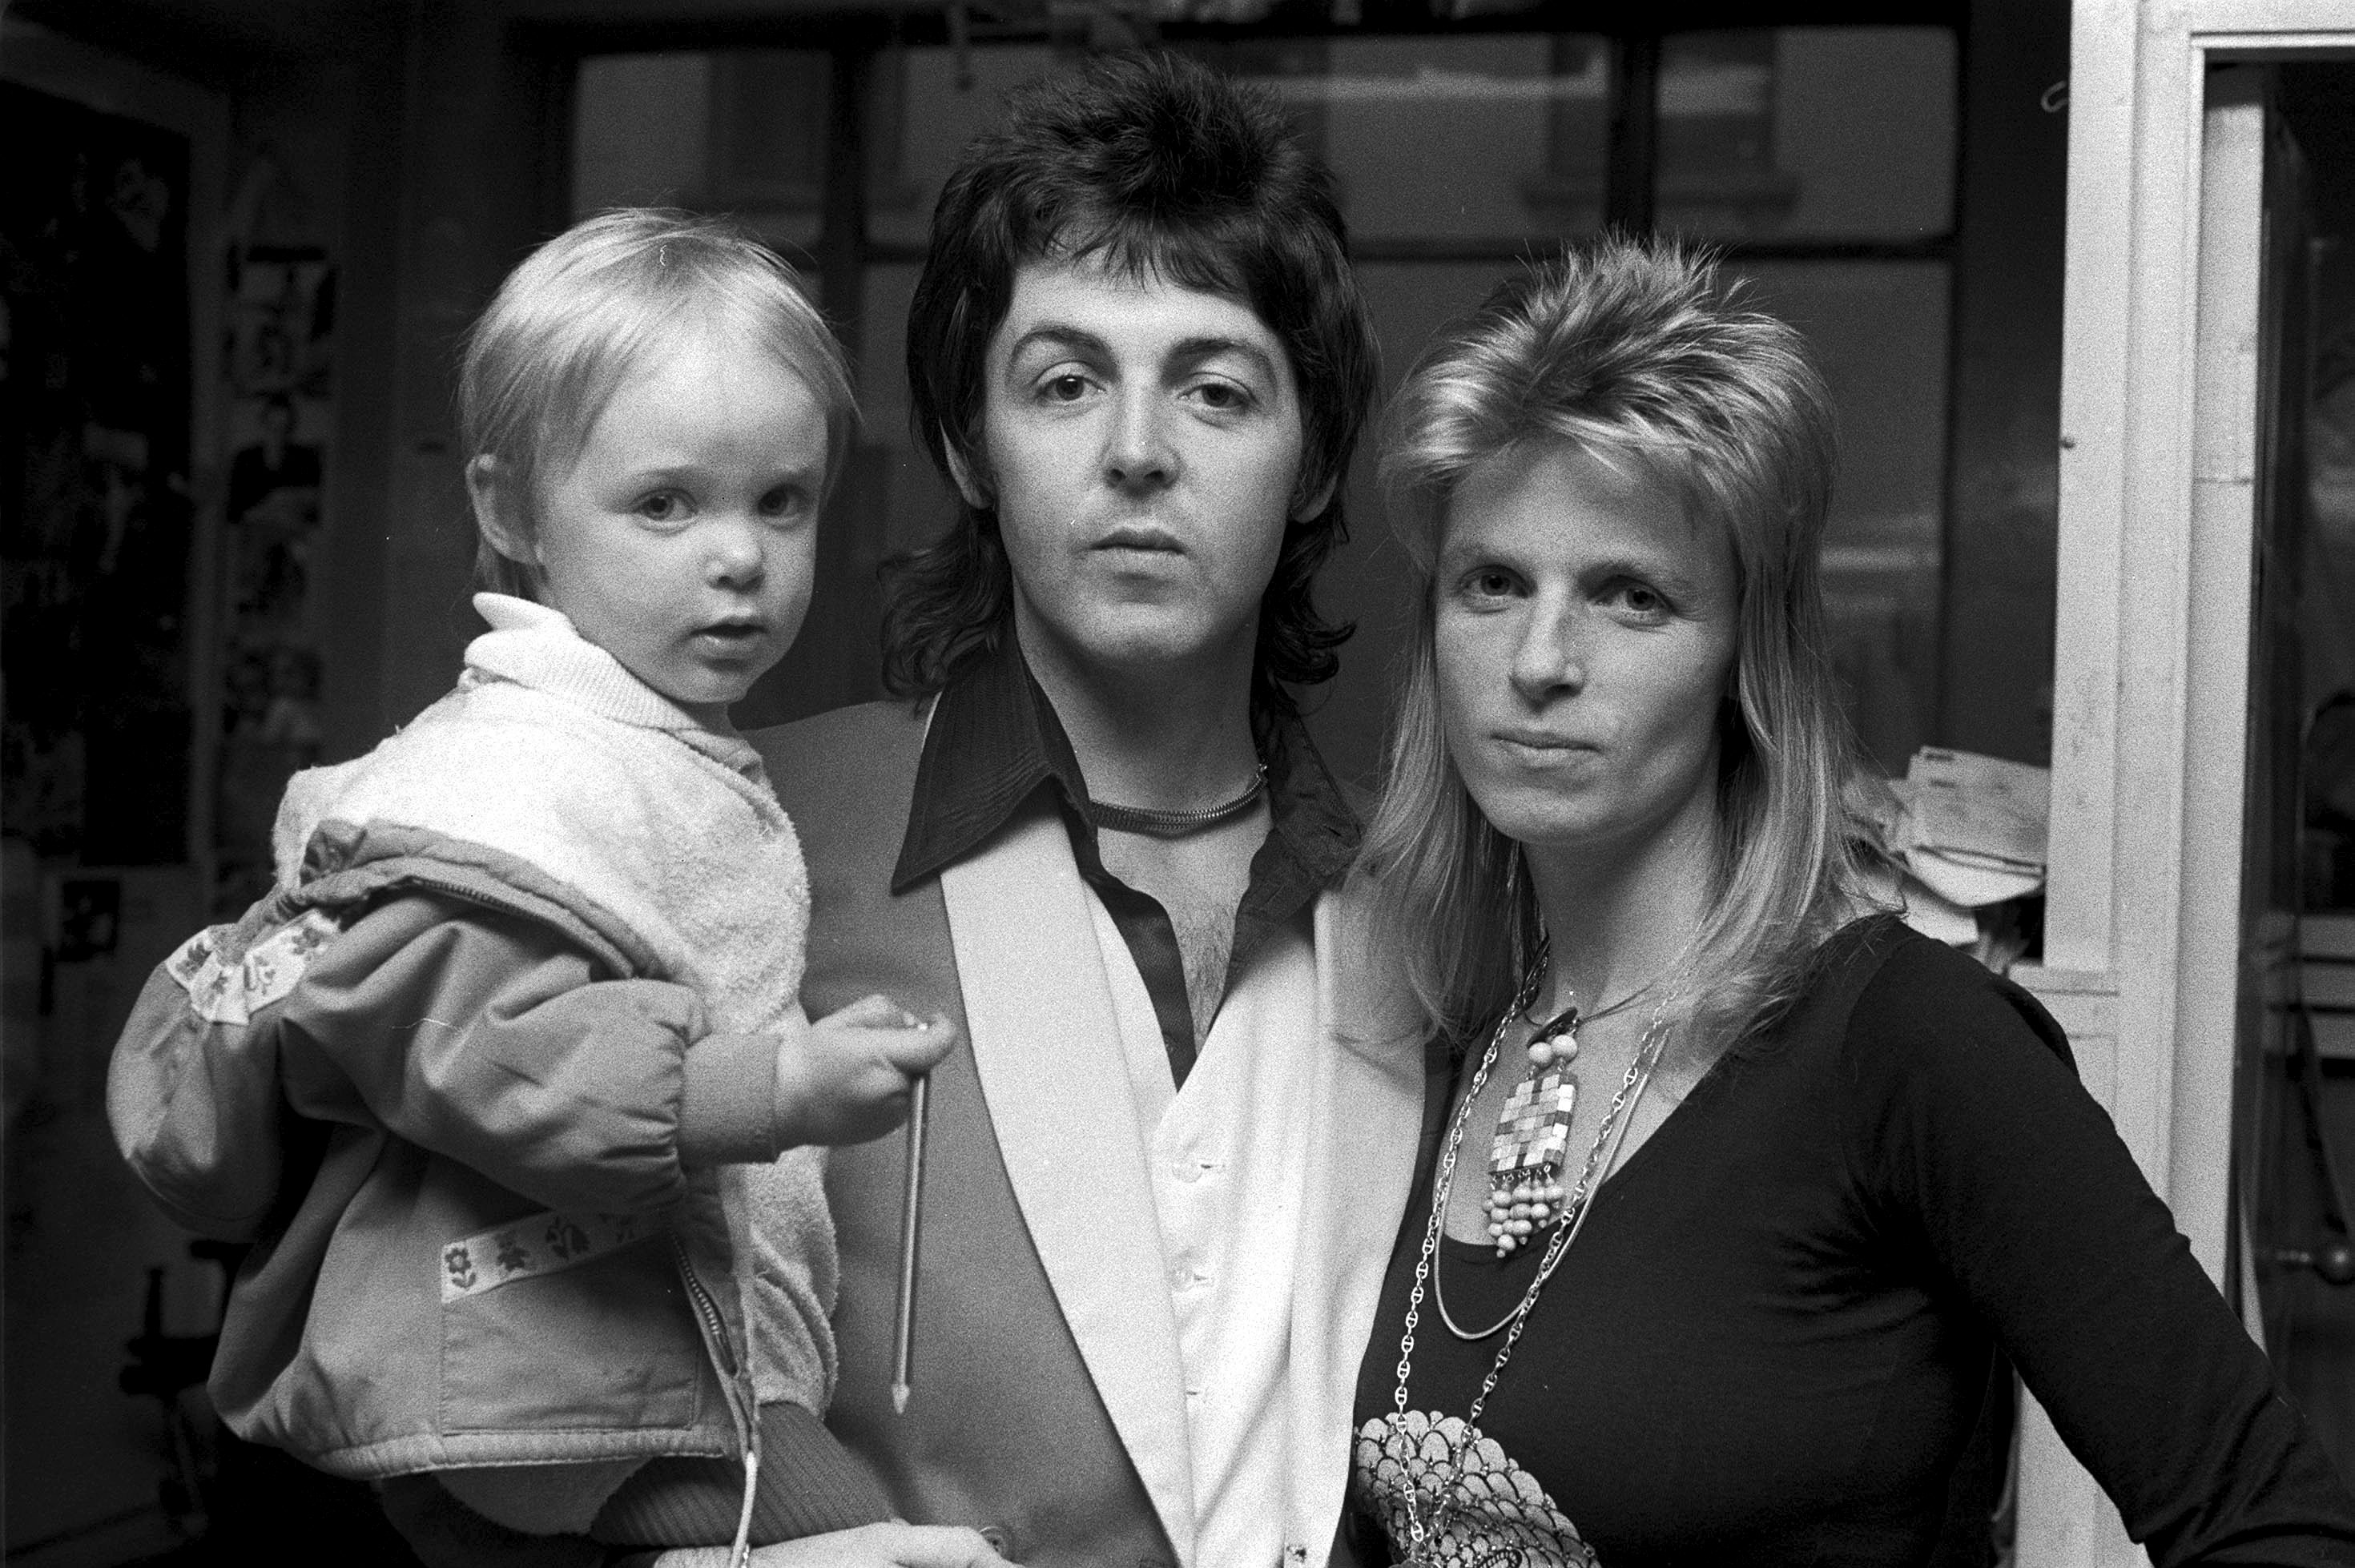 Paul McCartney holding Stella McCartney and standing next to Linda McCartney, the inspiration for "Maybe I'm Amazed"